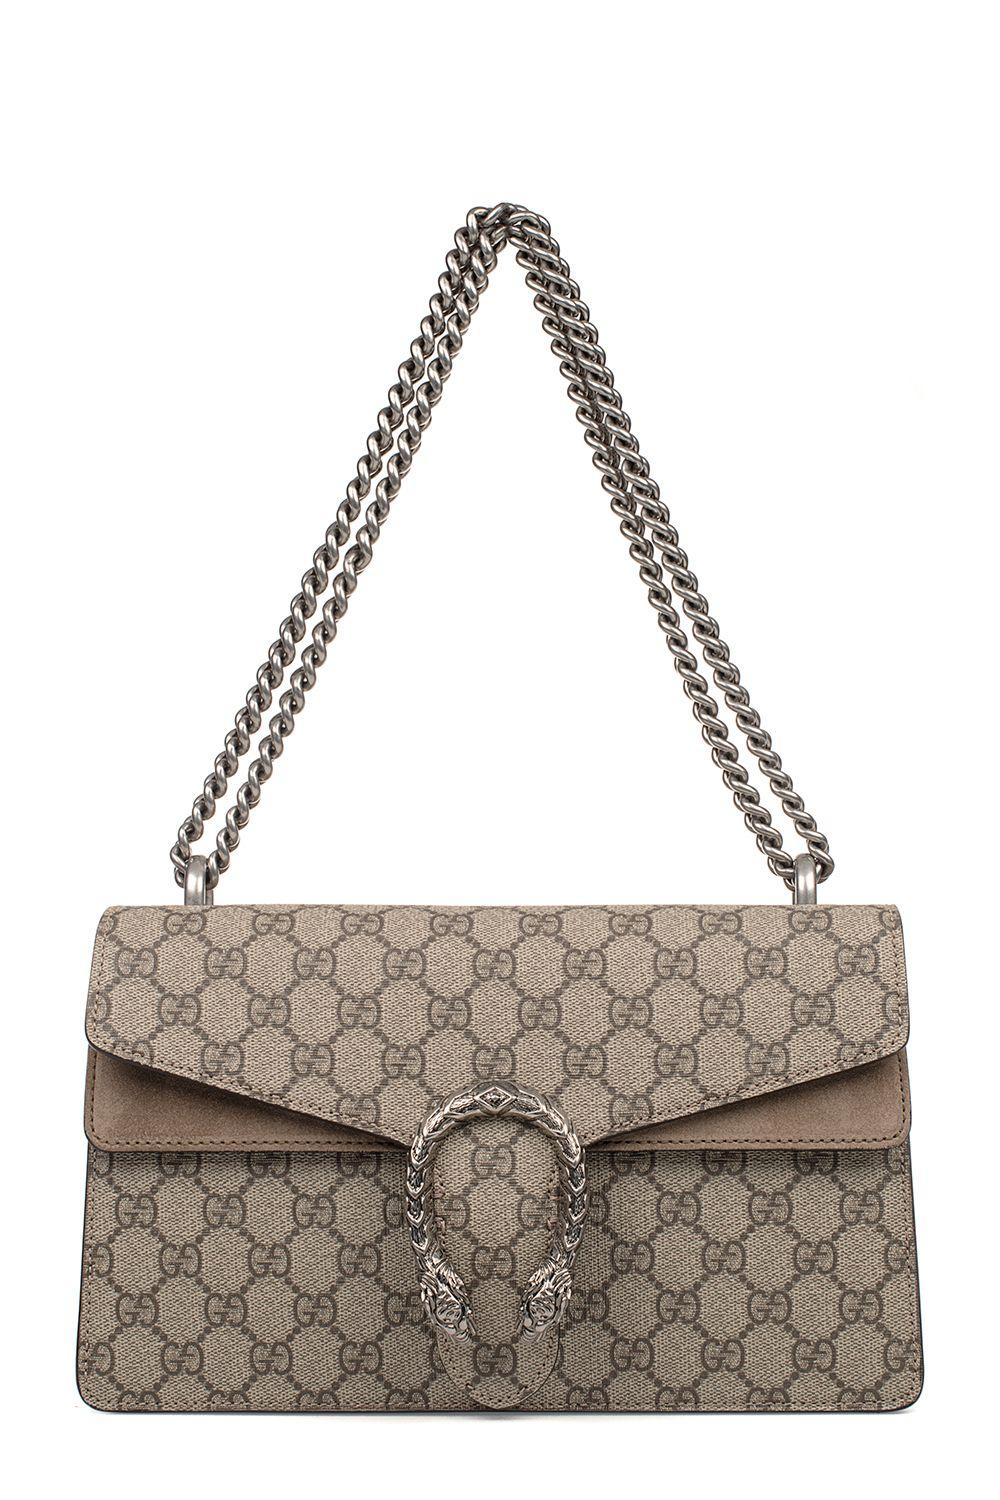 Gucci Sand-brown Medium Dionysus Gg Supreme Shoulder Bag | ModeSens